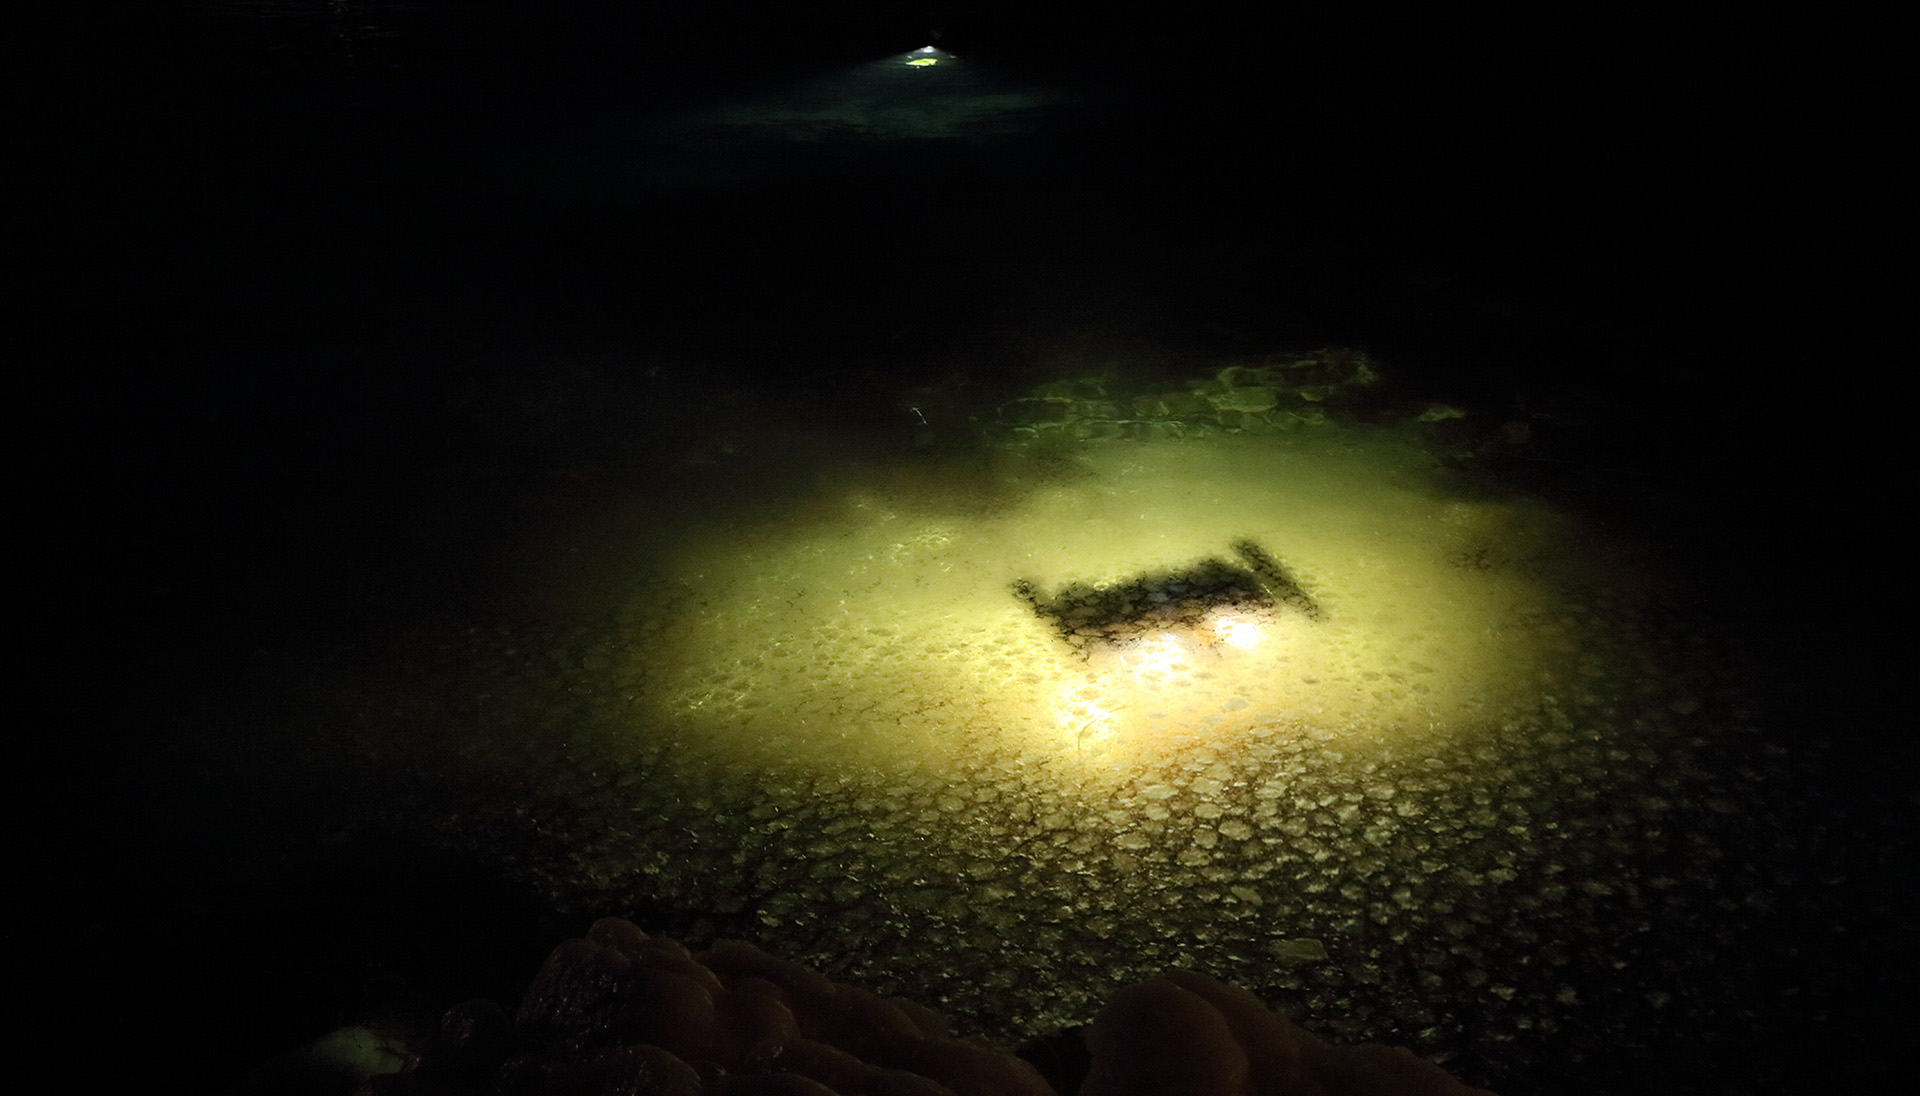 Two Blue eye ROV in the dark water. Photo